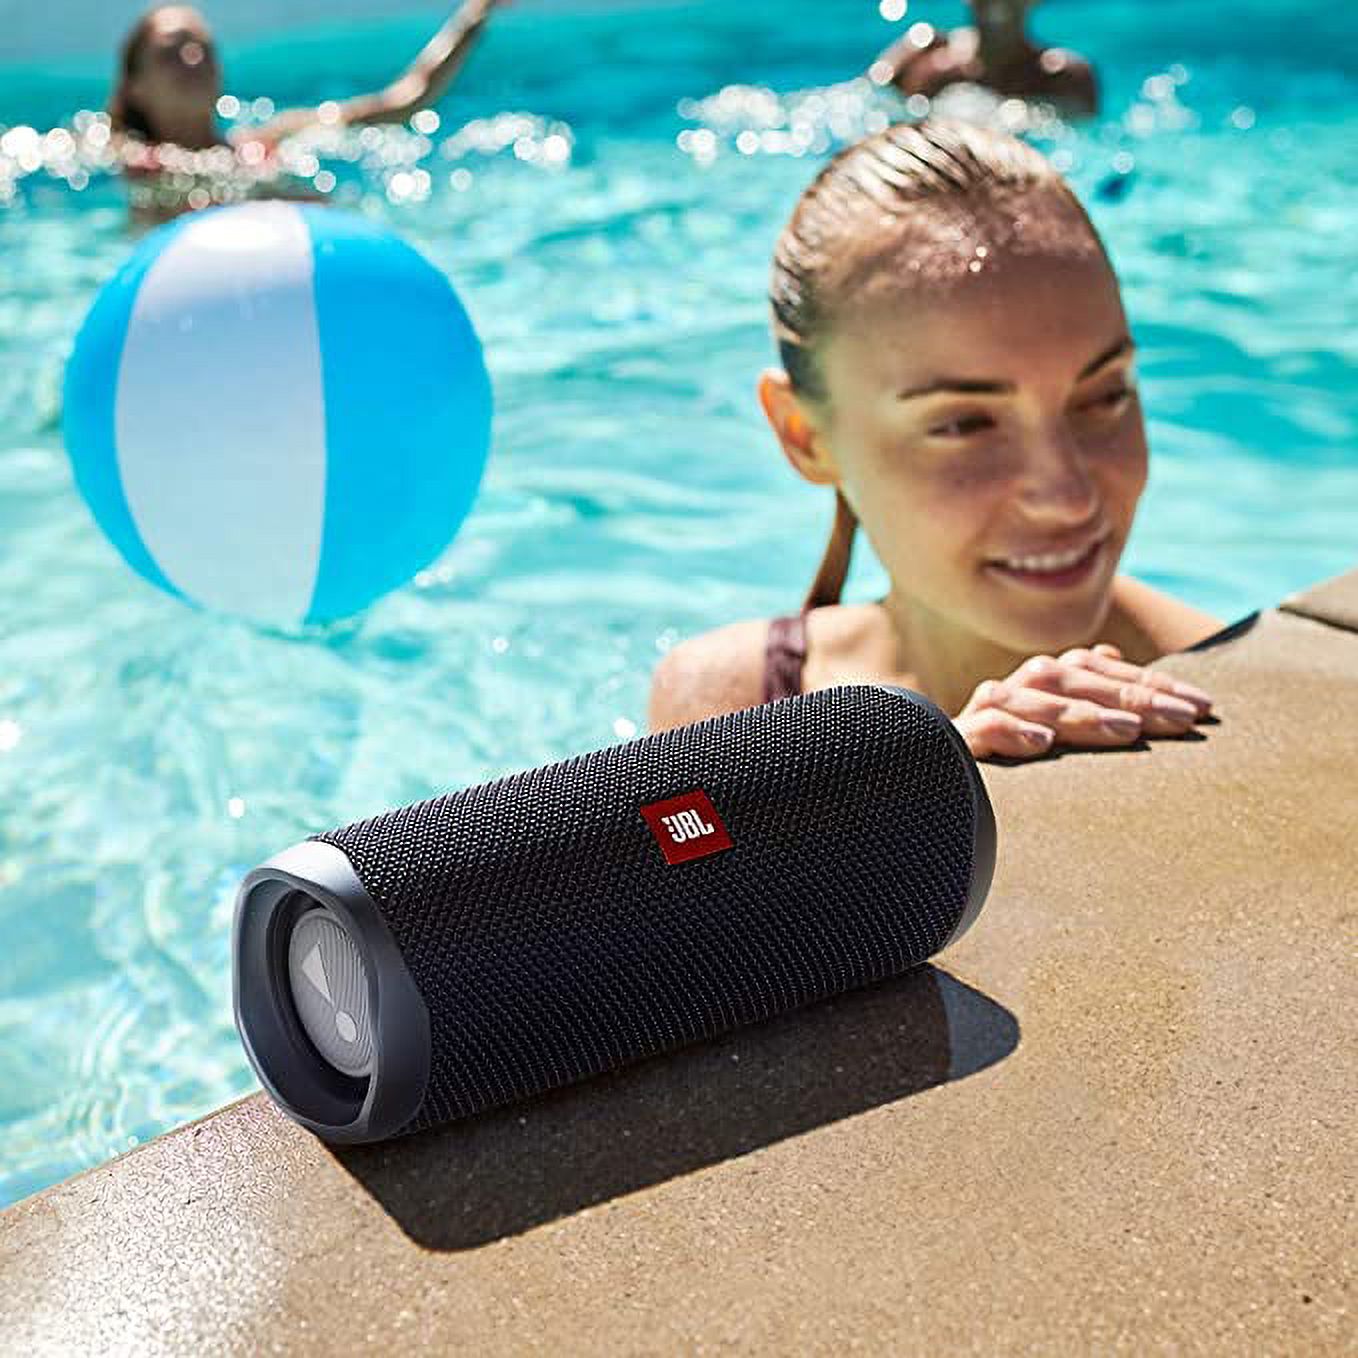 JBL Flip 5 Portable Waterproof Wireless Bluetooth Speaker - Black - image 5 of 5